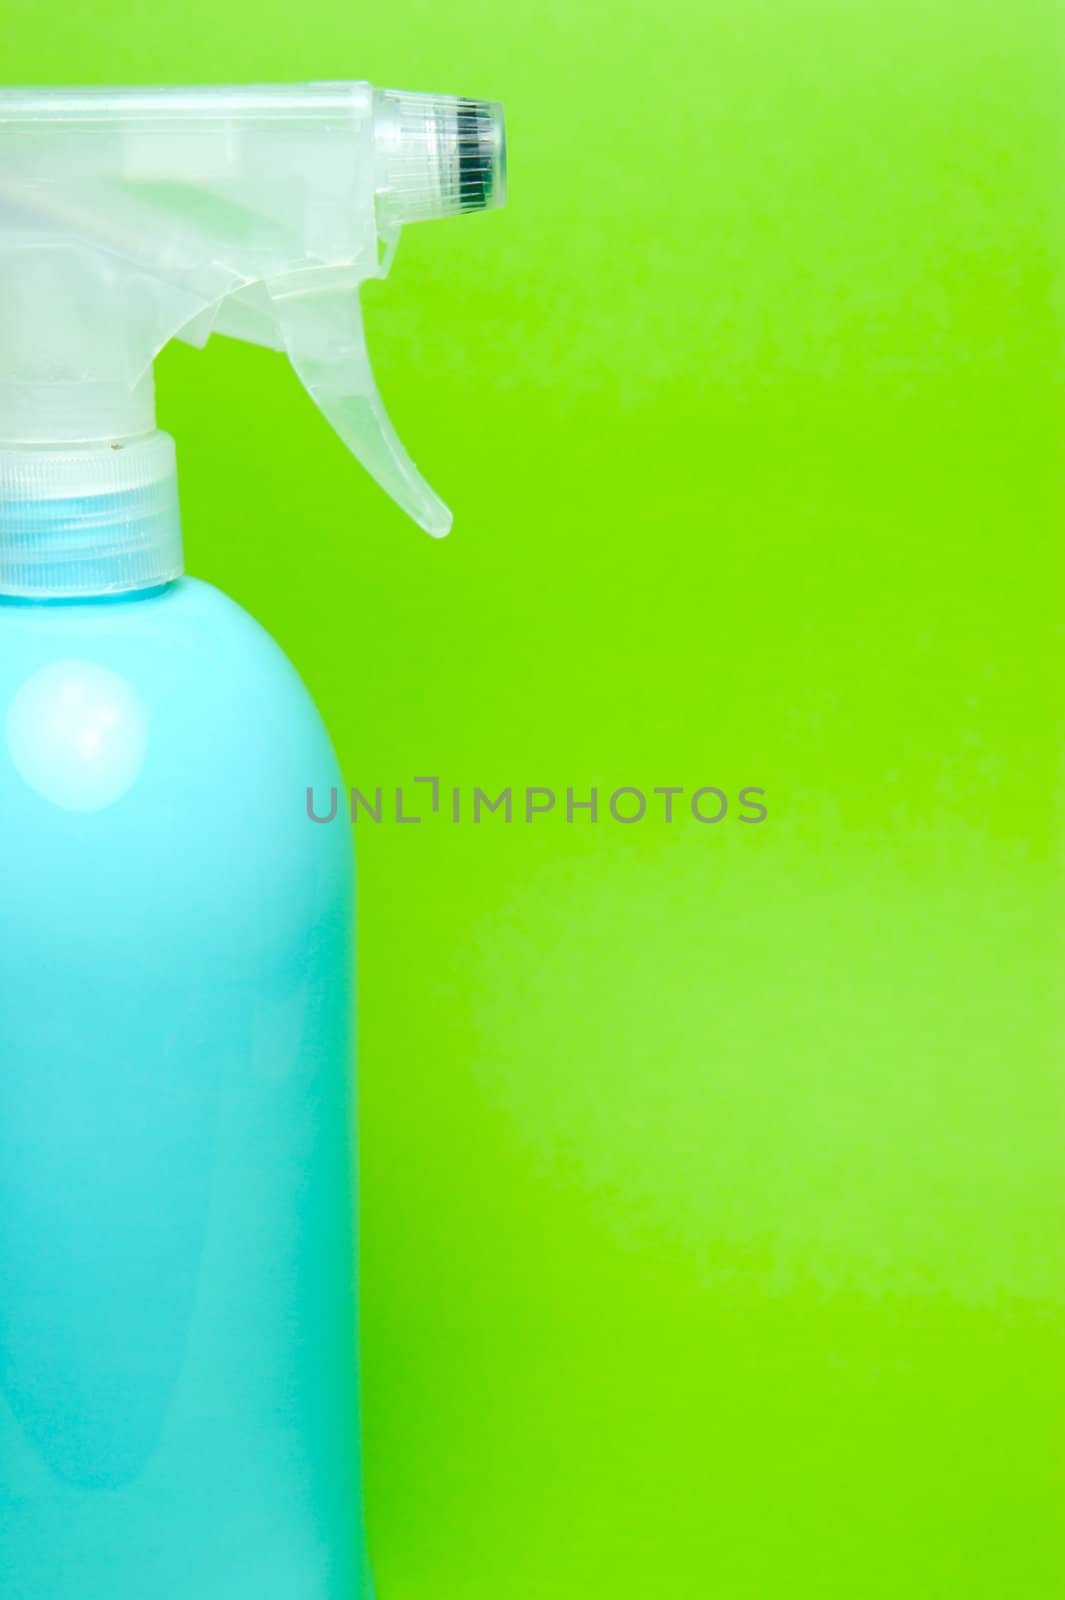 Spray Bottle by Kitch